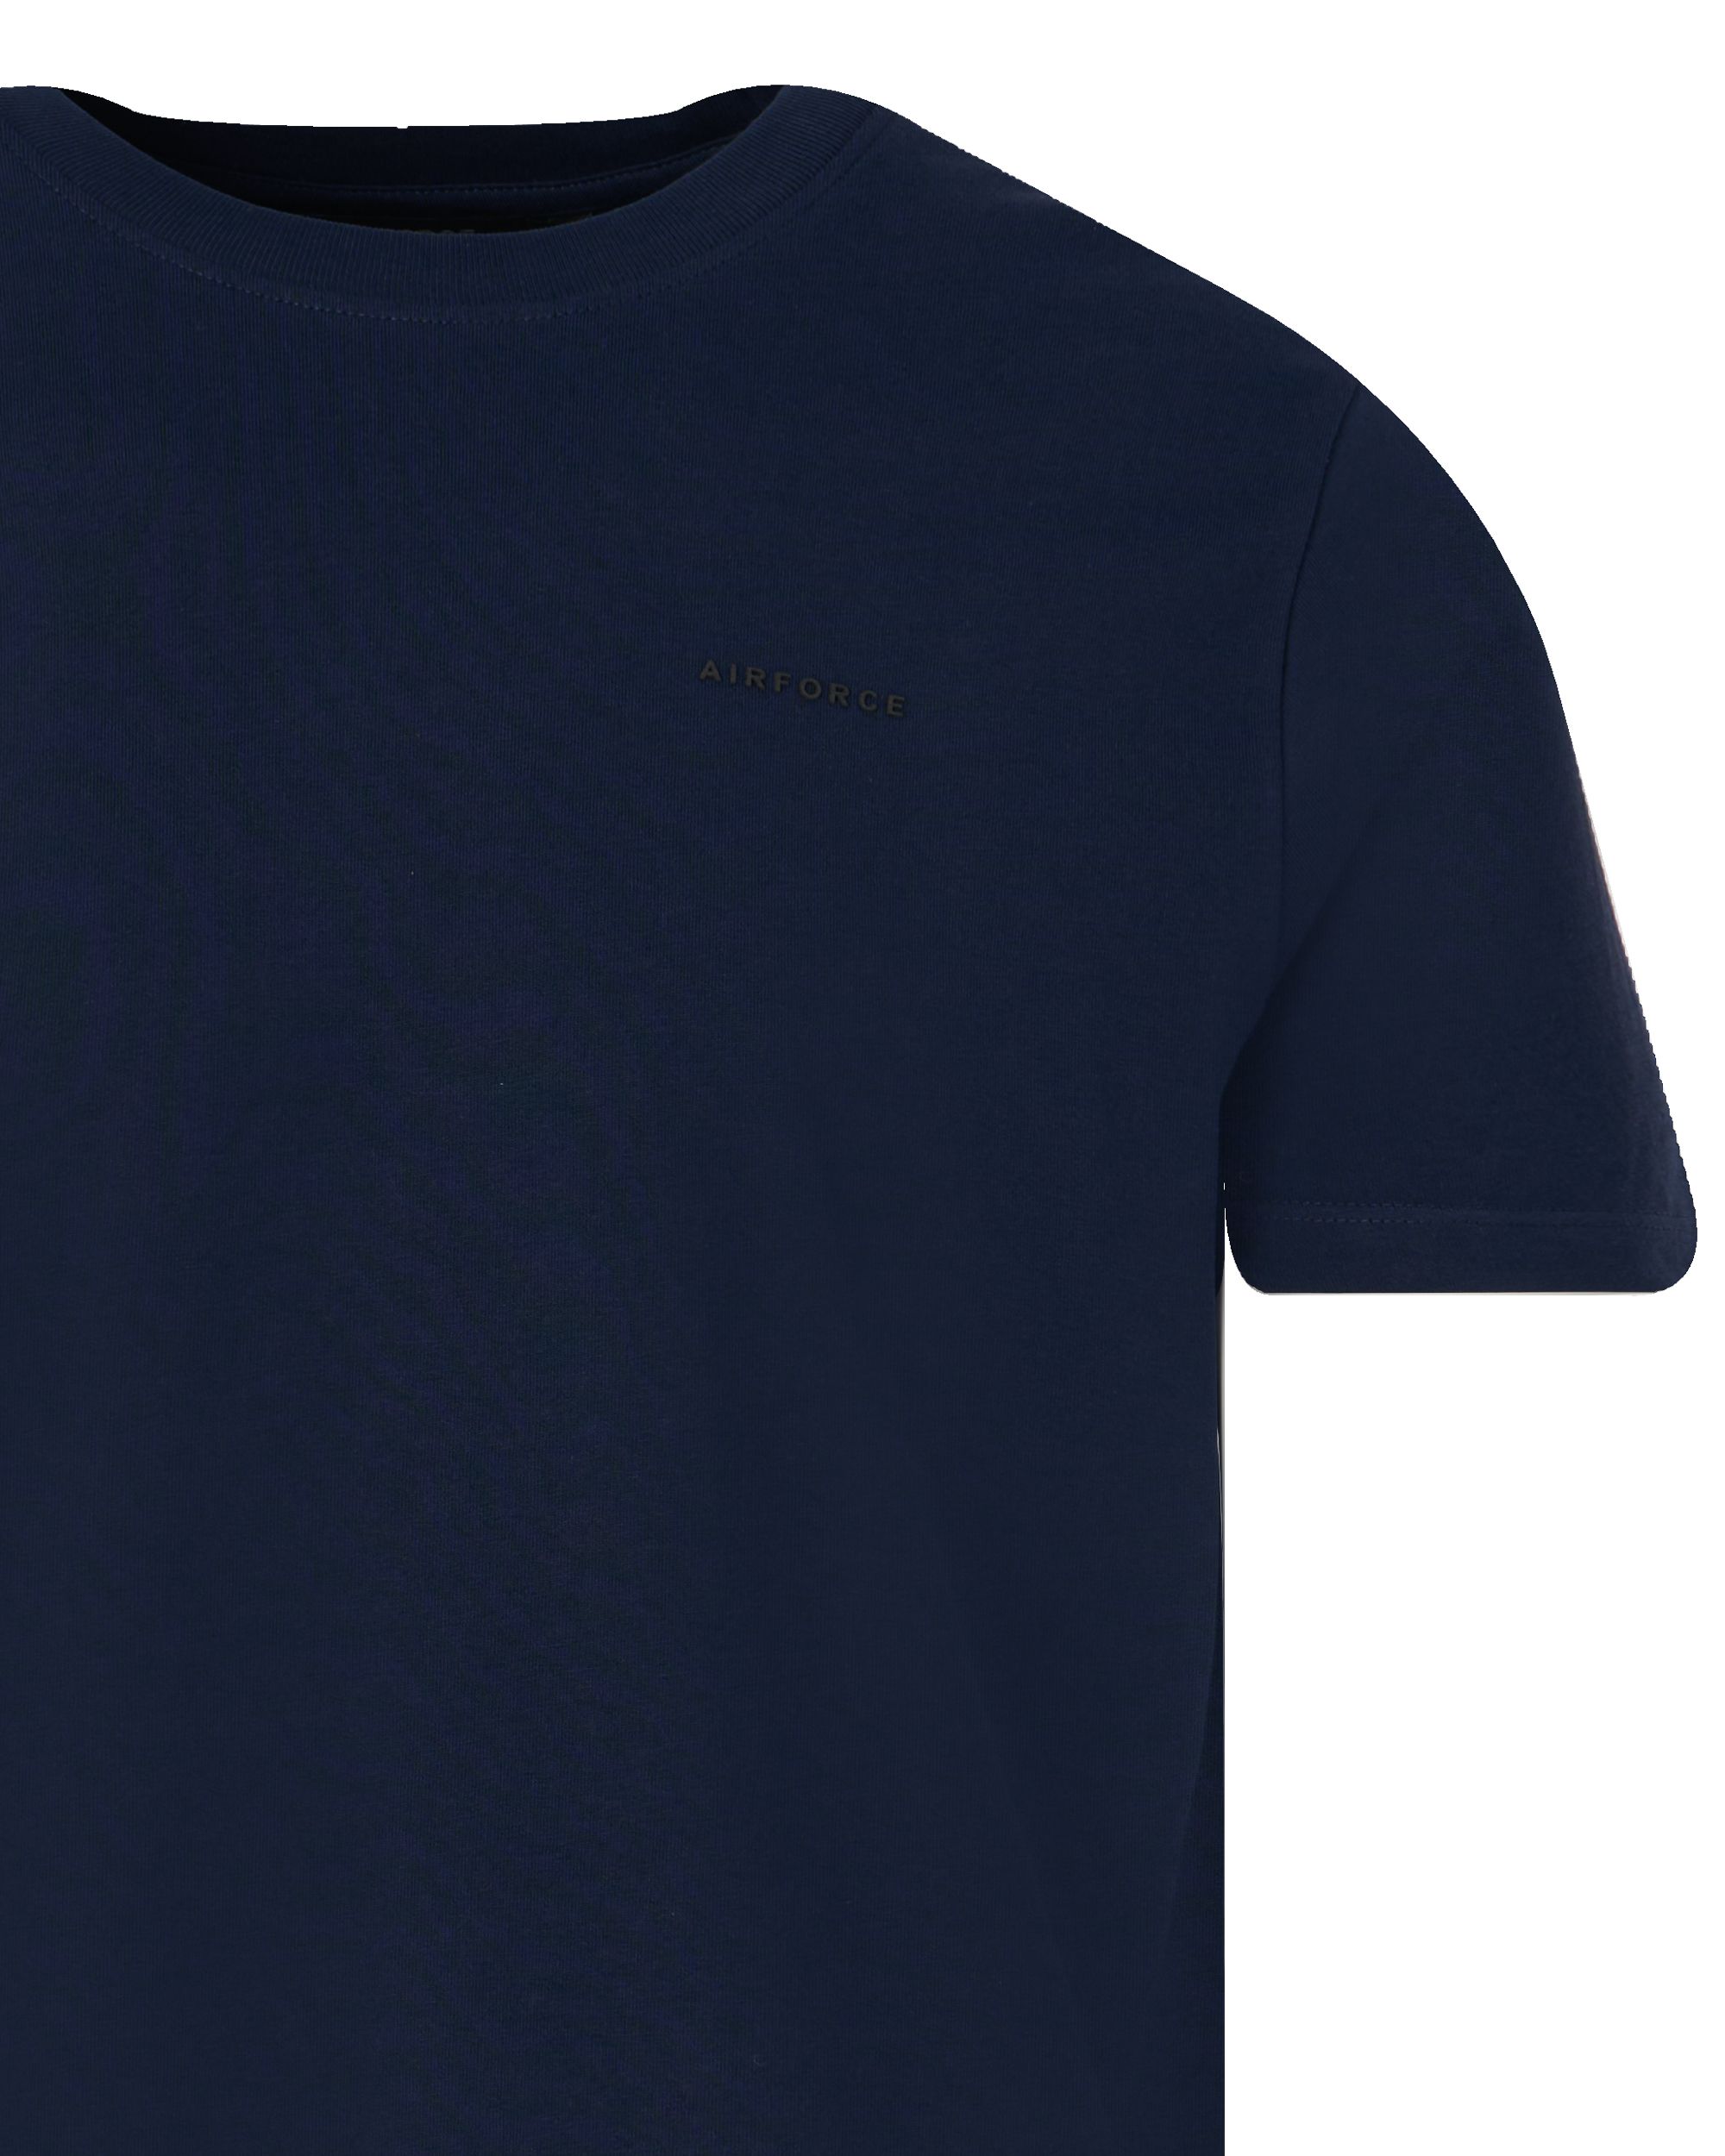 Airforce T-shirt KM Donker blauw 092914-001-L